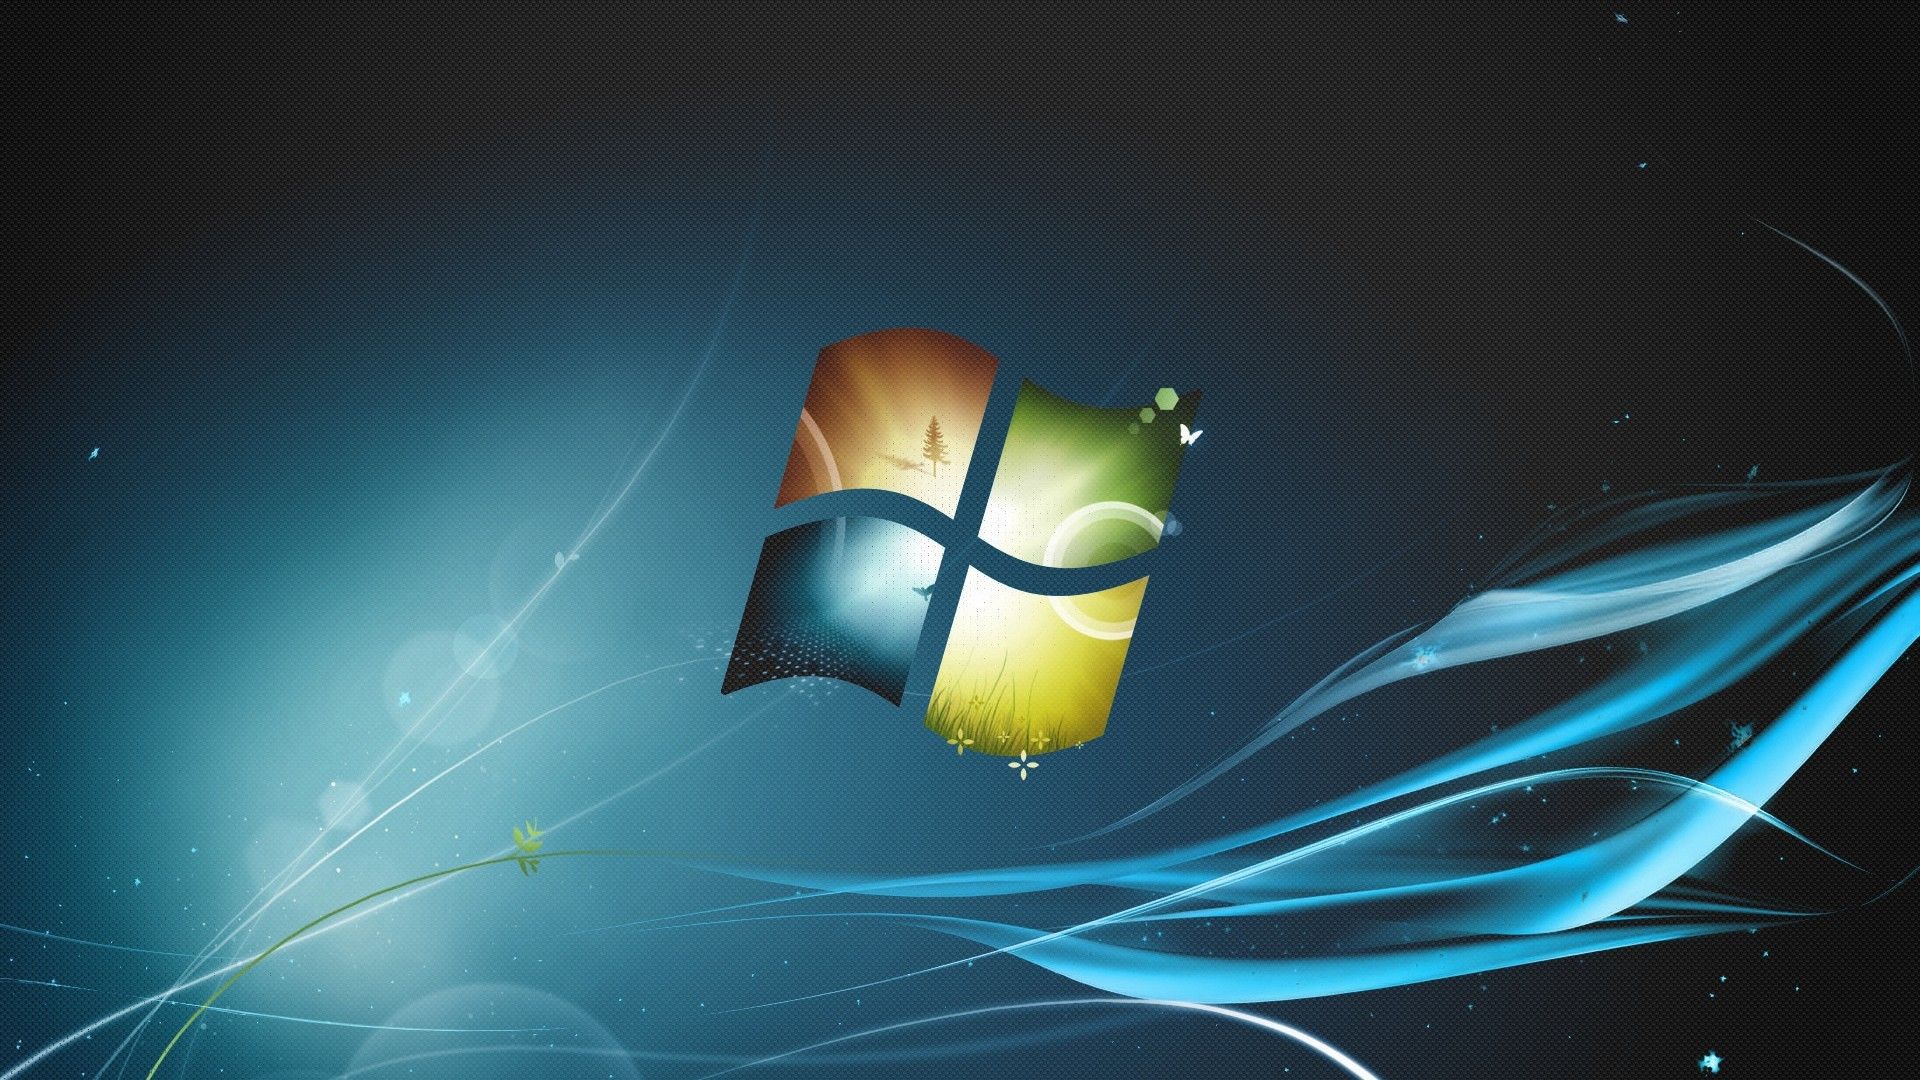 Microsoft Windows 7 Cool Backgrounds Wallpaper 1130 - Amazing ...